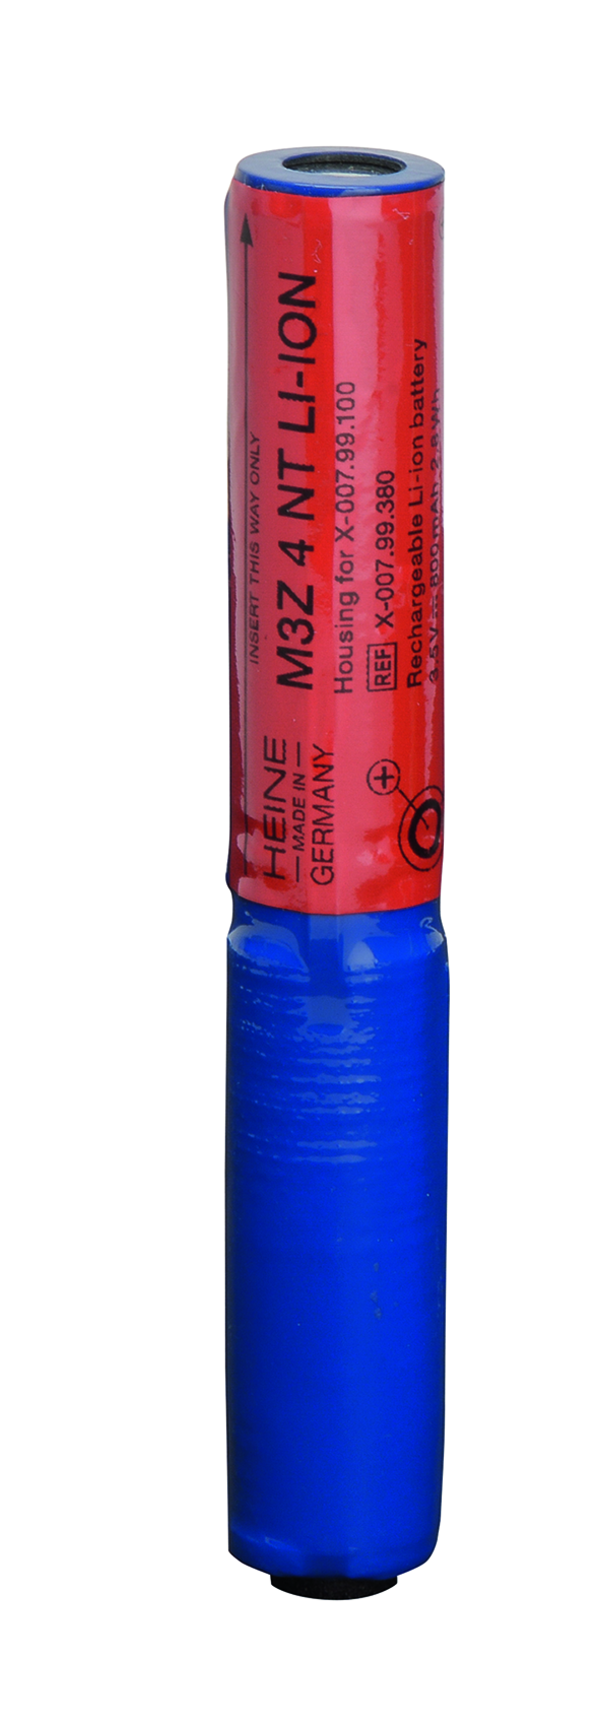 HEINE BETA 4 SLIM M3Z, Li-ion Rechargeable battery [X-007.99.380]
